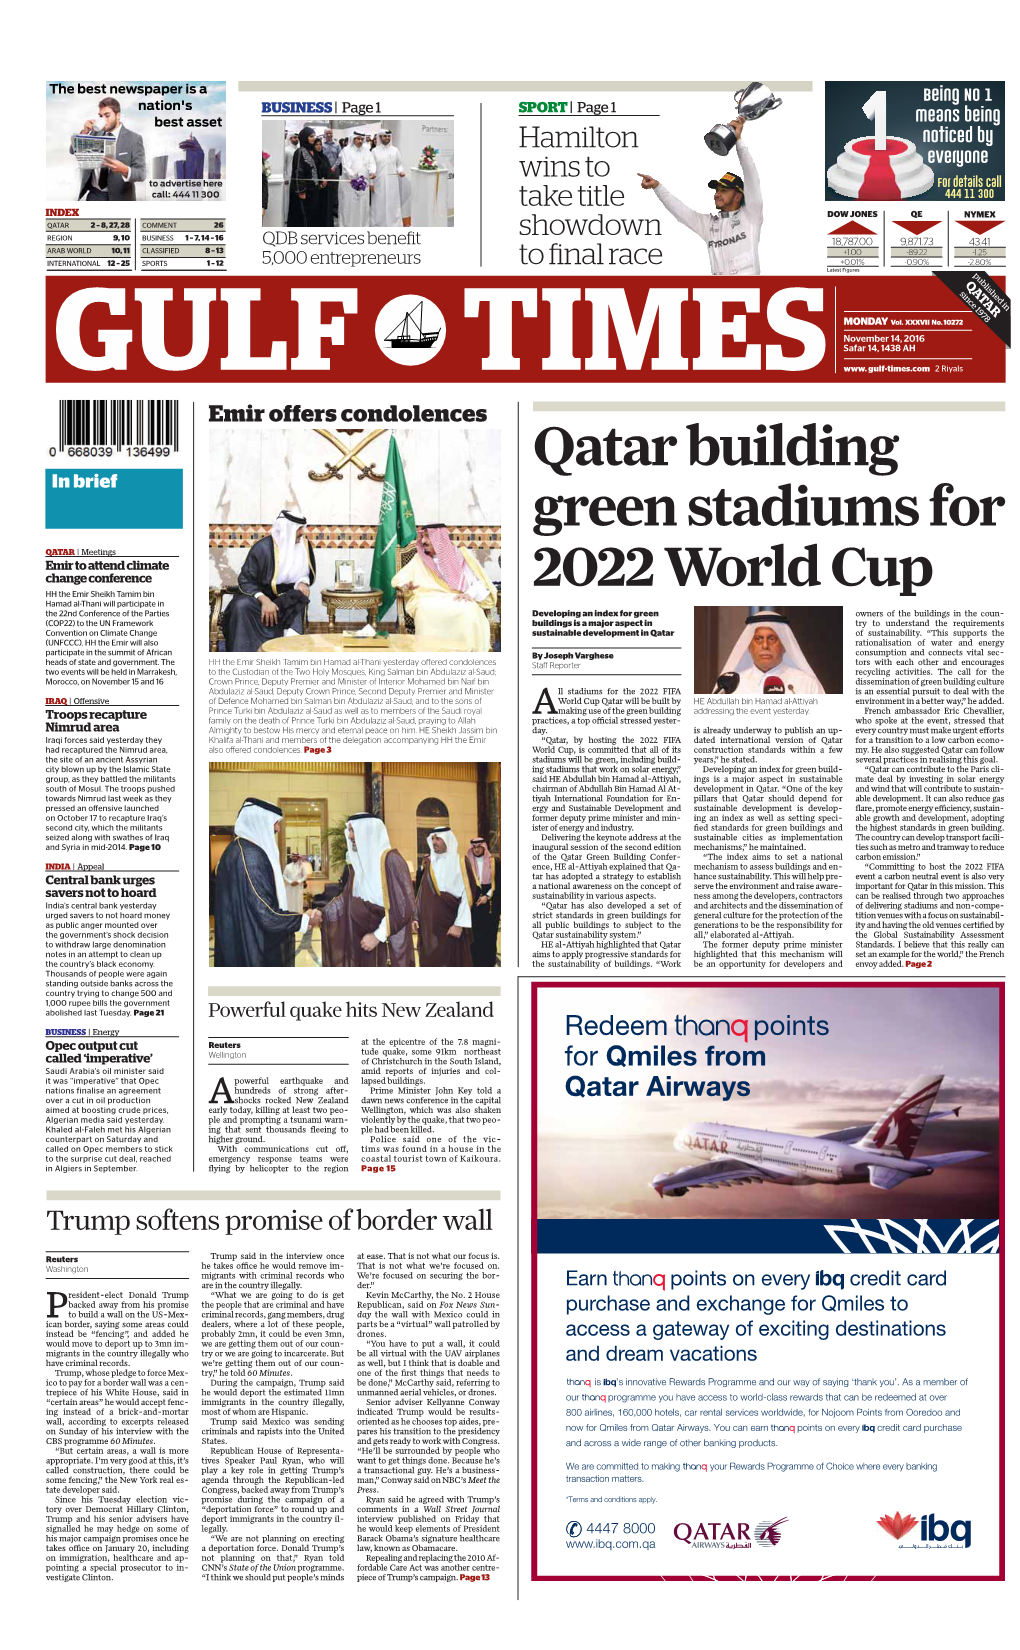 Qatar Building Green Stadiums for 2022 World